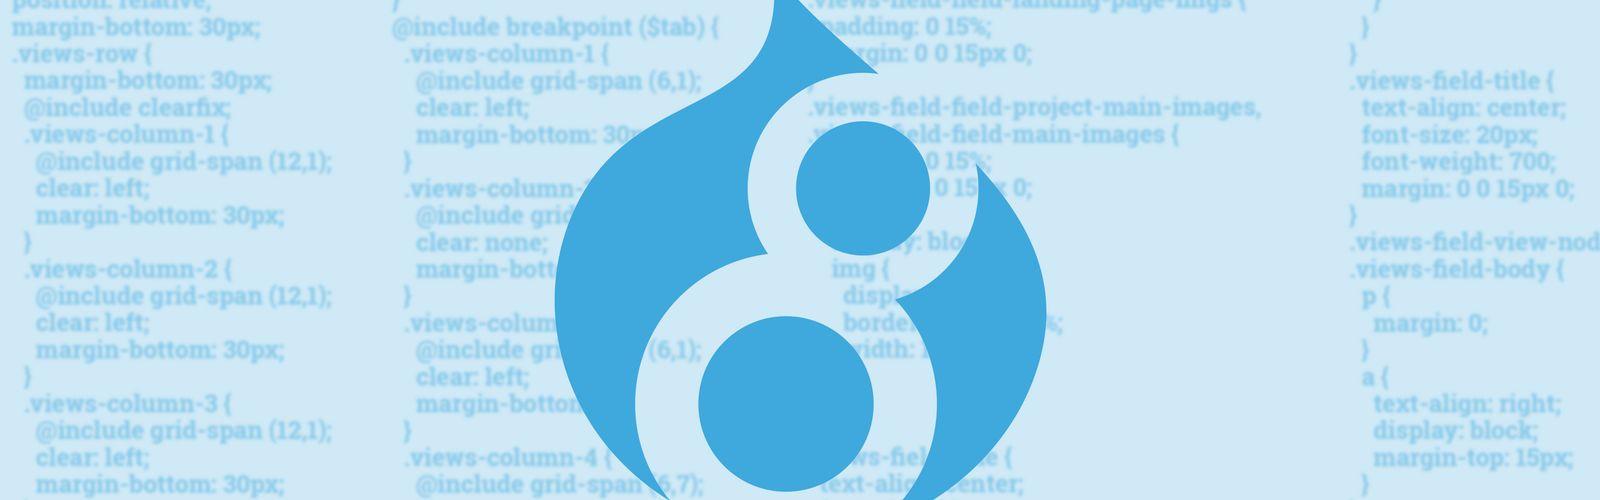 With 8 Blue Lines Logo - Kickstarting with Drupal 8 themes | Drupal Website Design ...